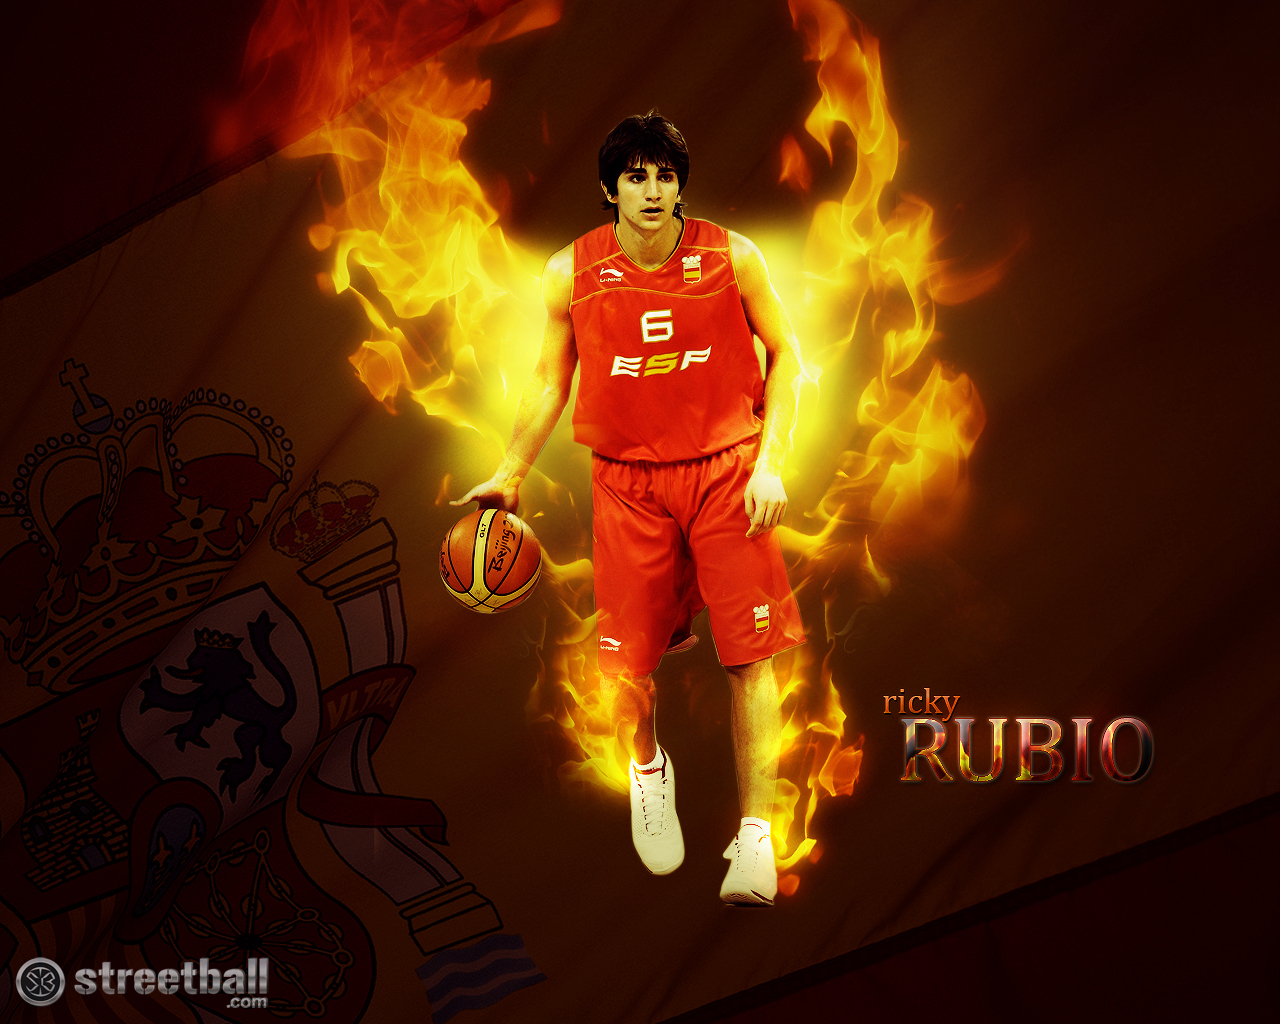 Ricky Rubio Spain Basketball Wallpaper 2012 - Streetball